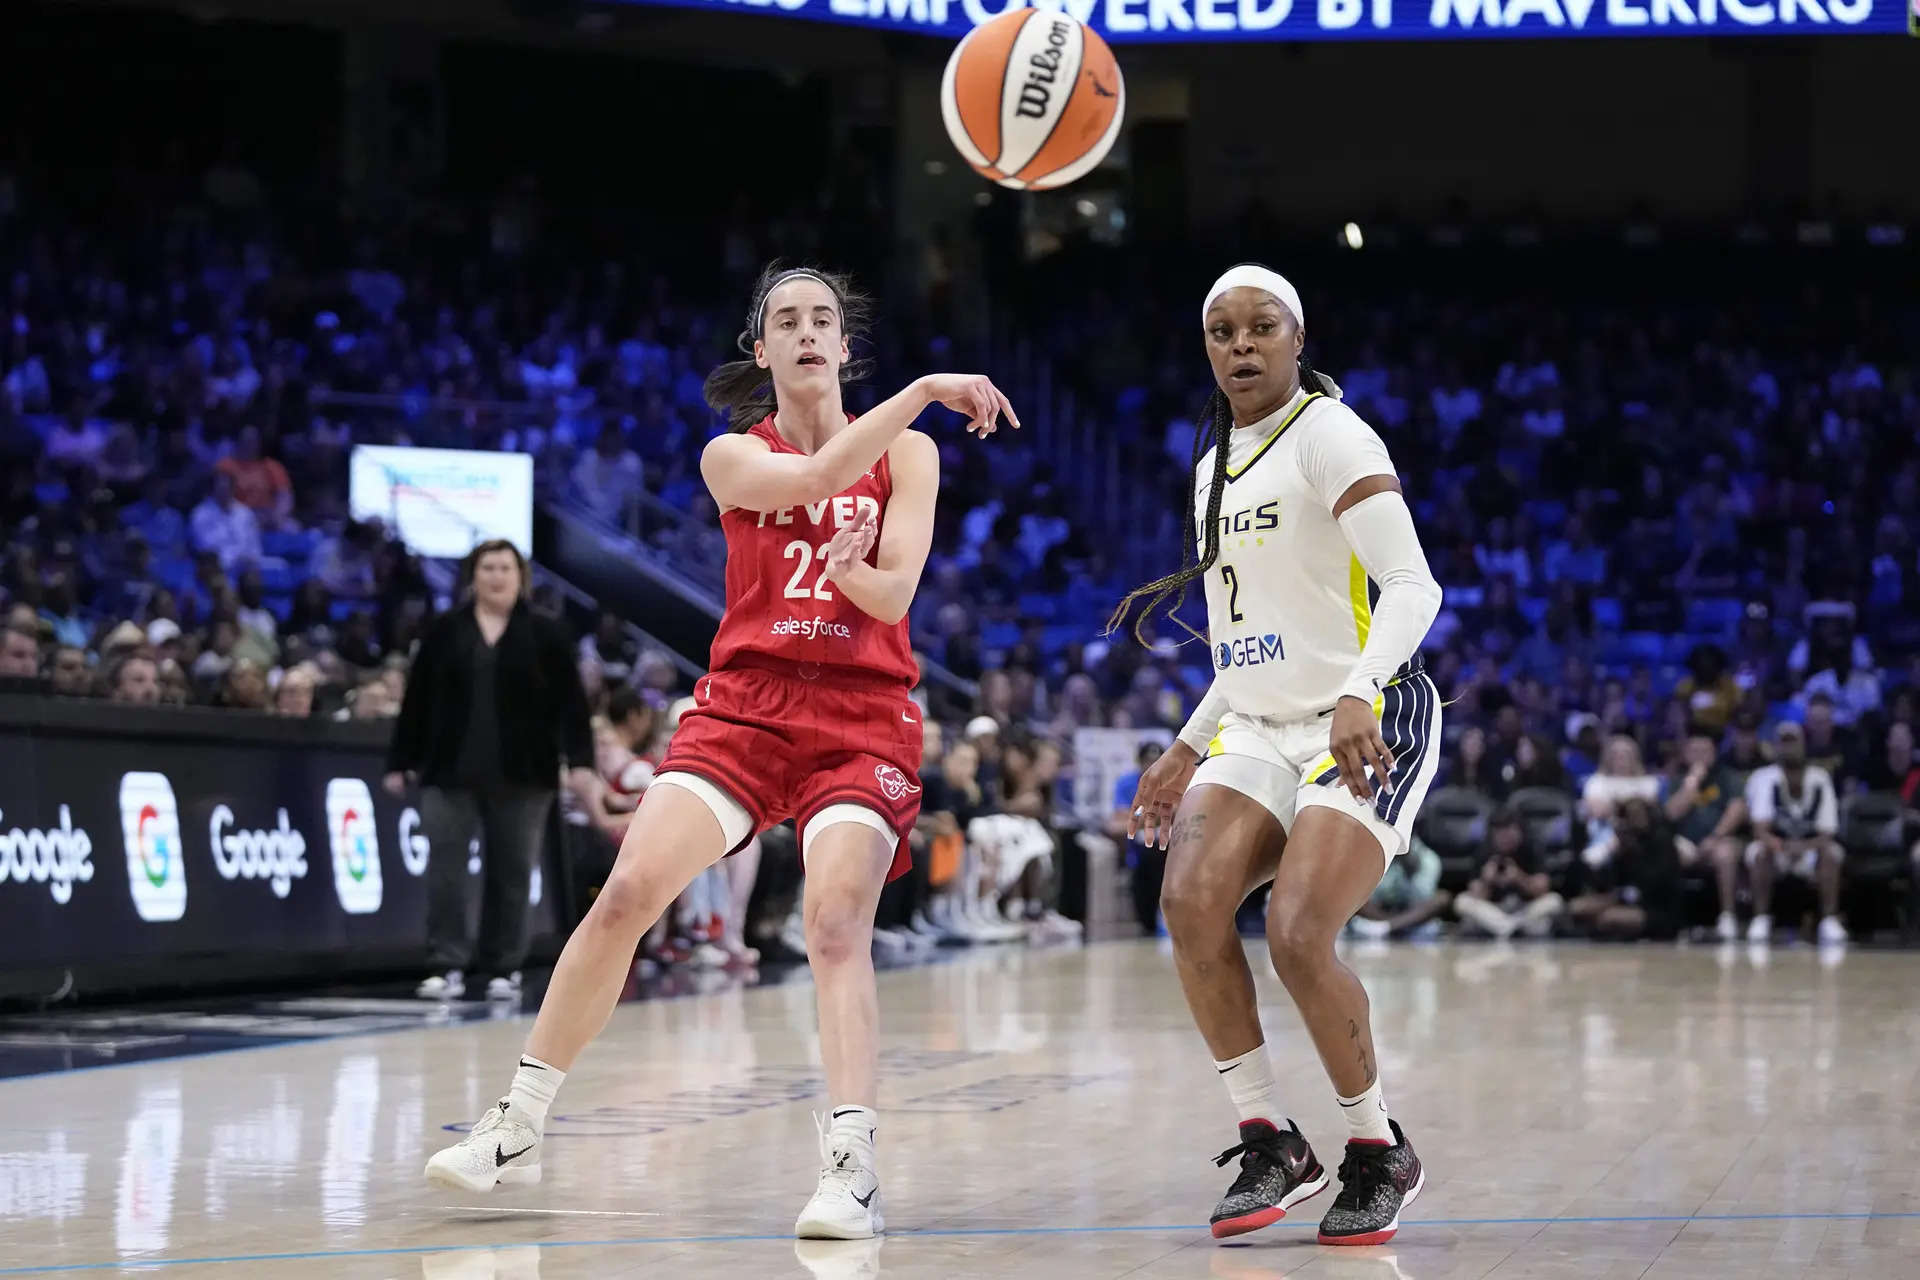 WNBA: Viewership tops records as rookies shine, women's sports interest grows 